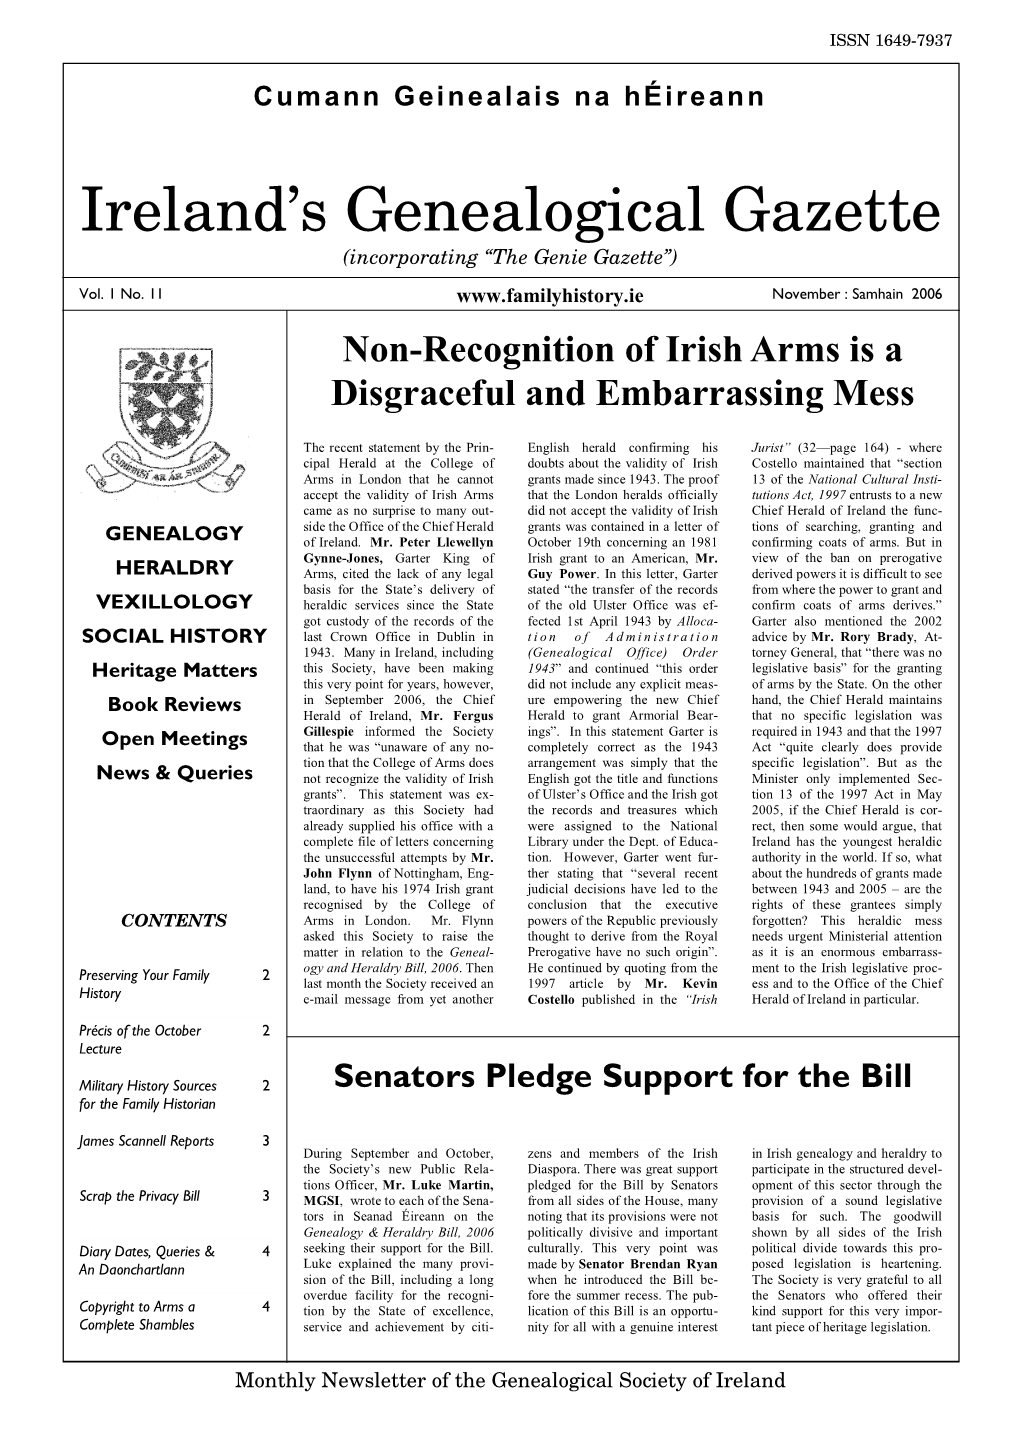 Ireland's Genealogical Gazette (November 2006)